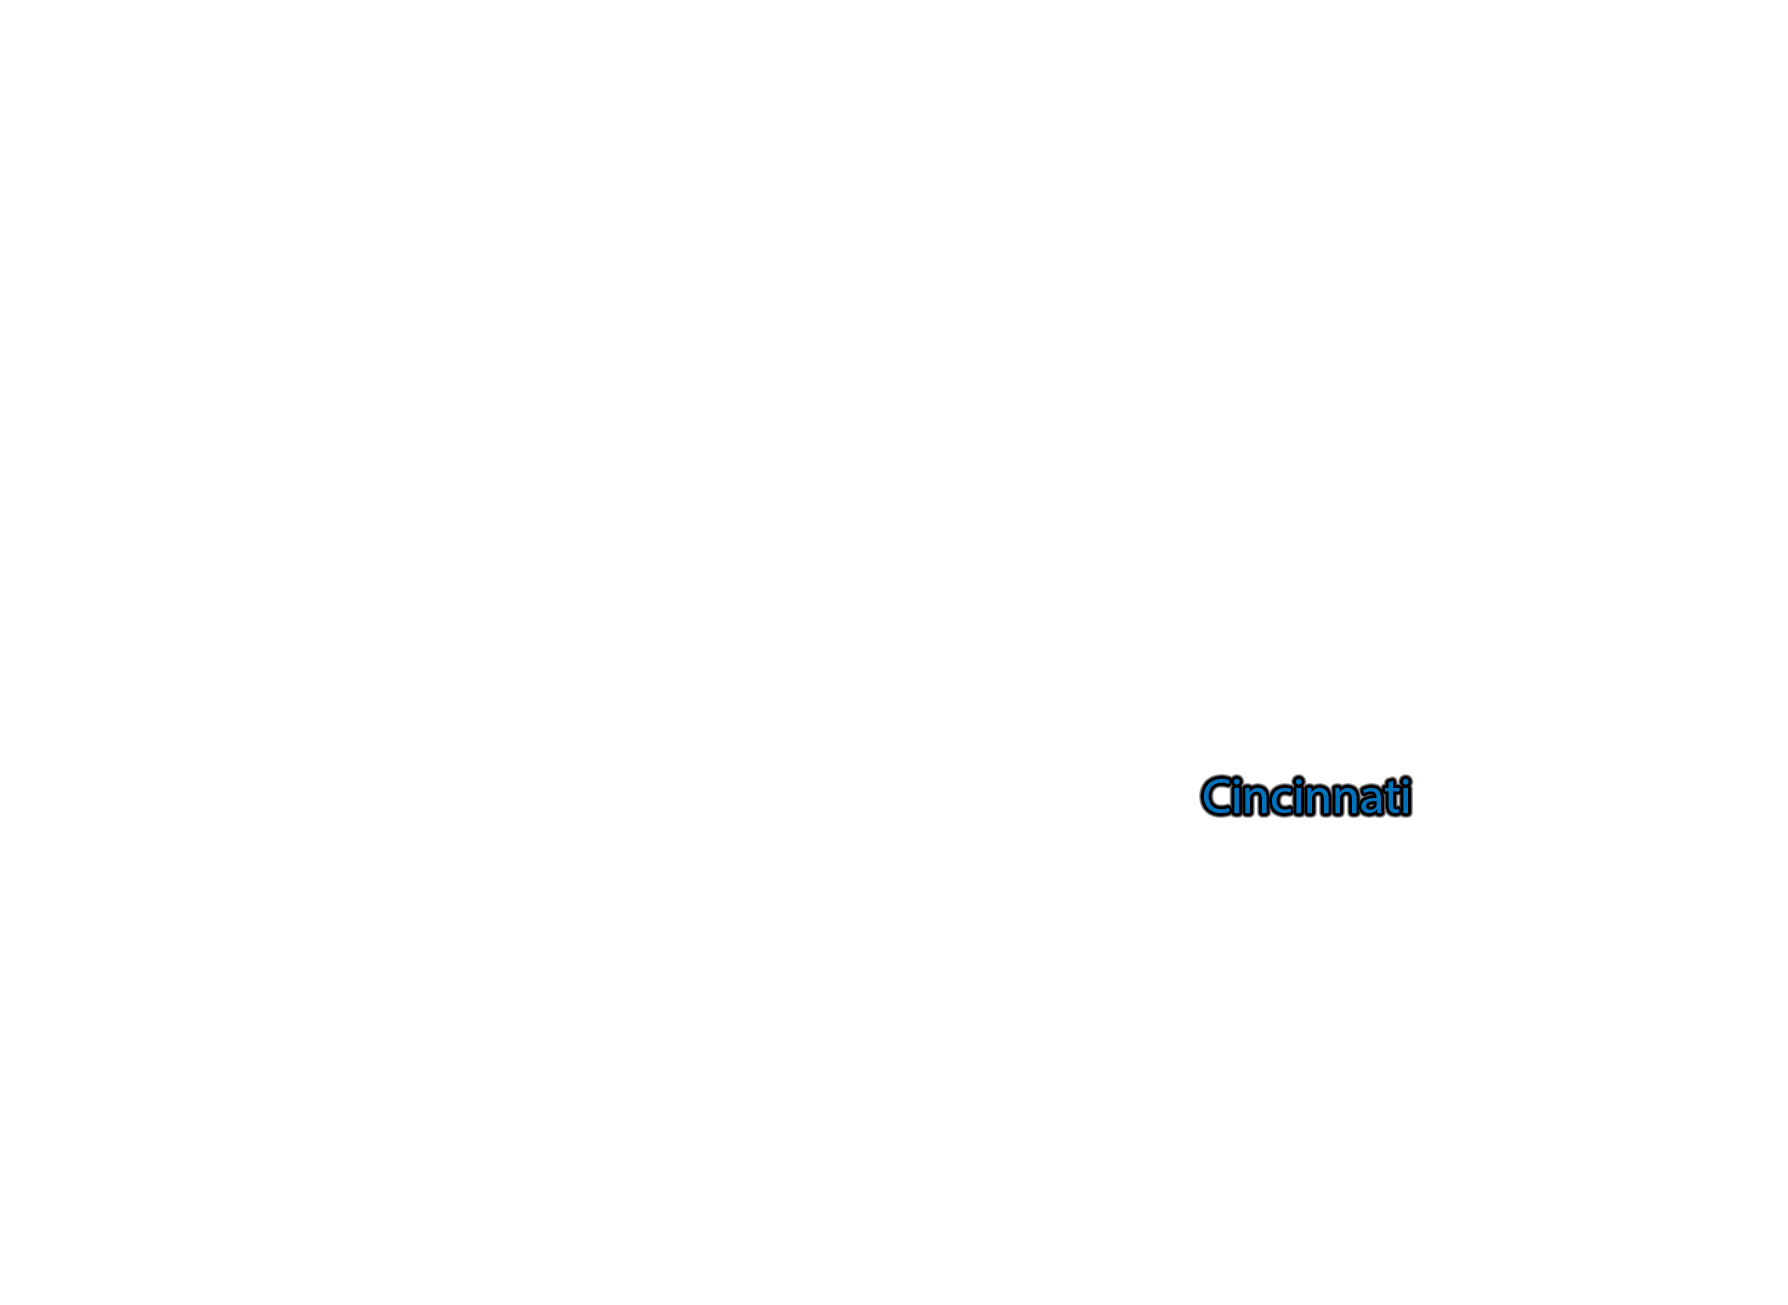 Cincinnati label with glow